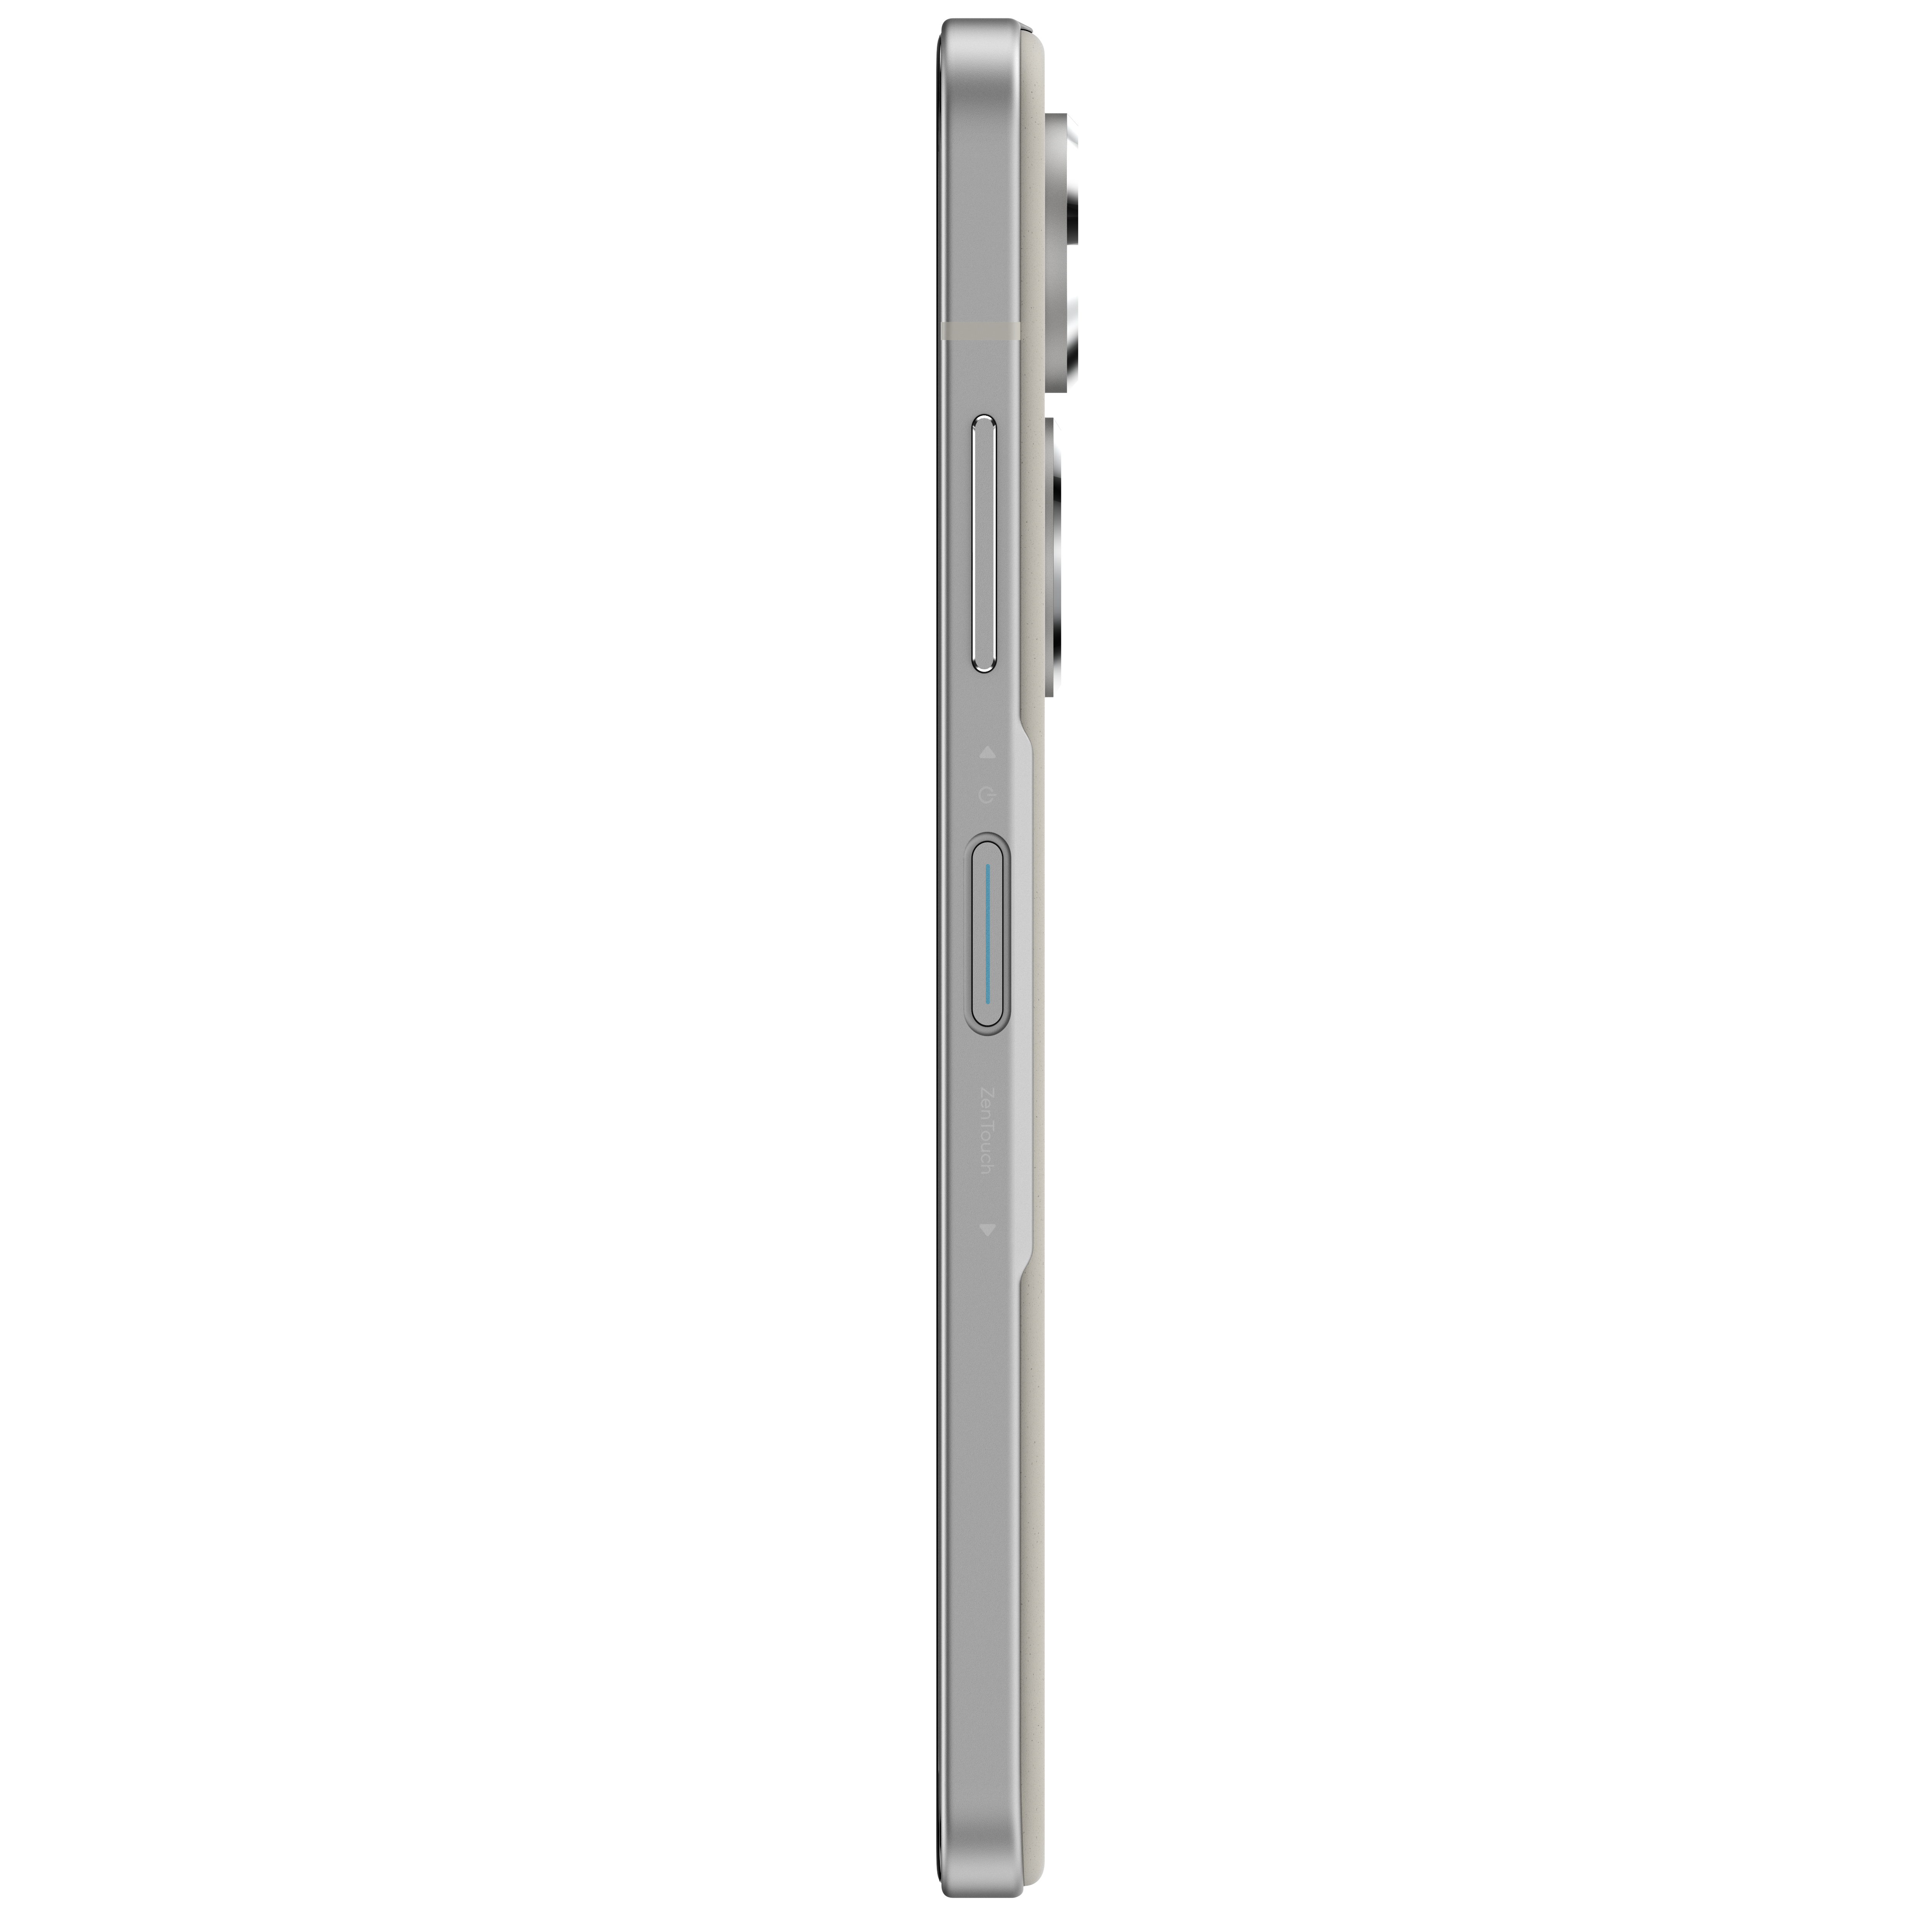 Dual SIM Moonlight GB 9 128 ASUS White Zenfone